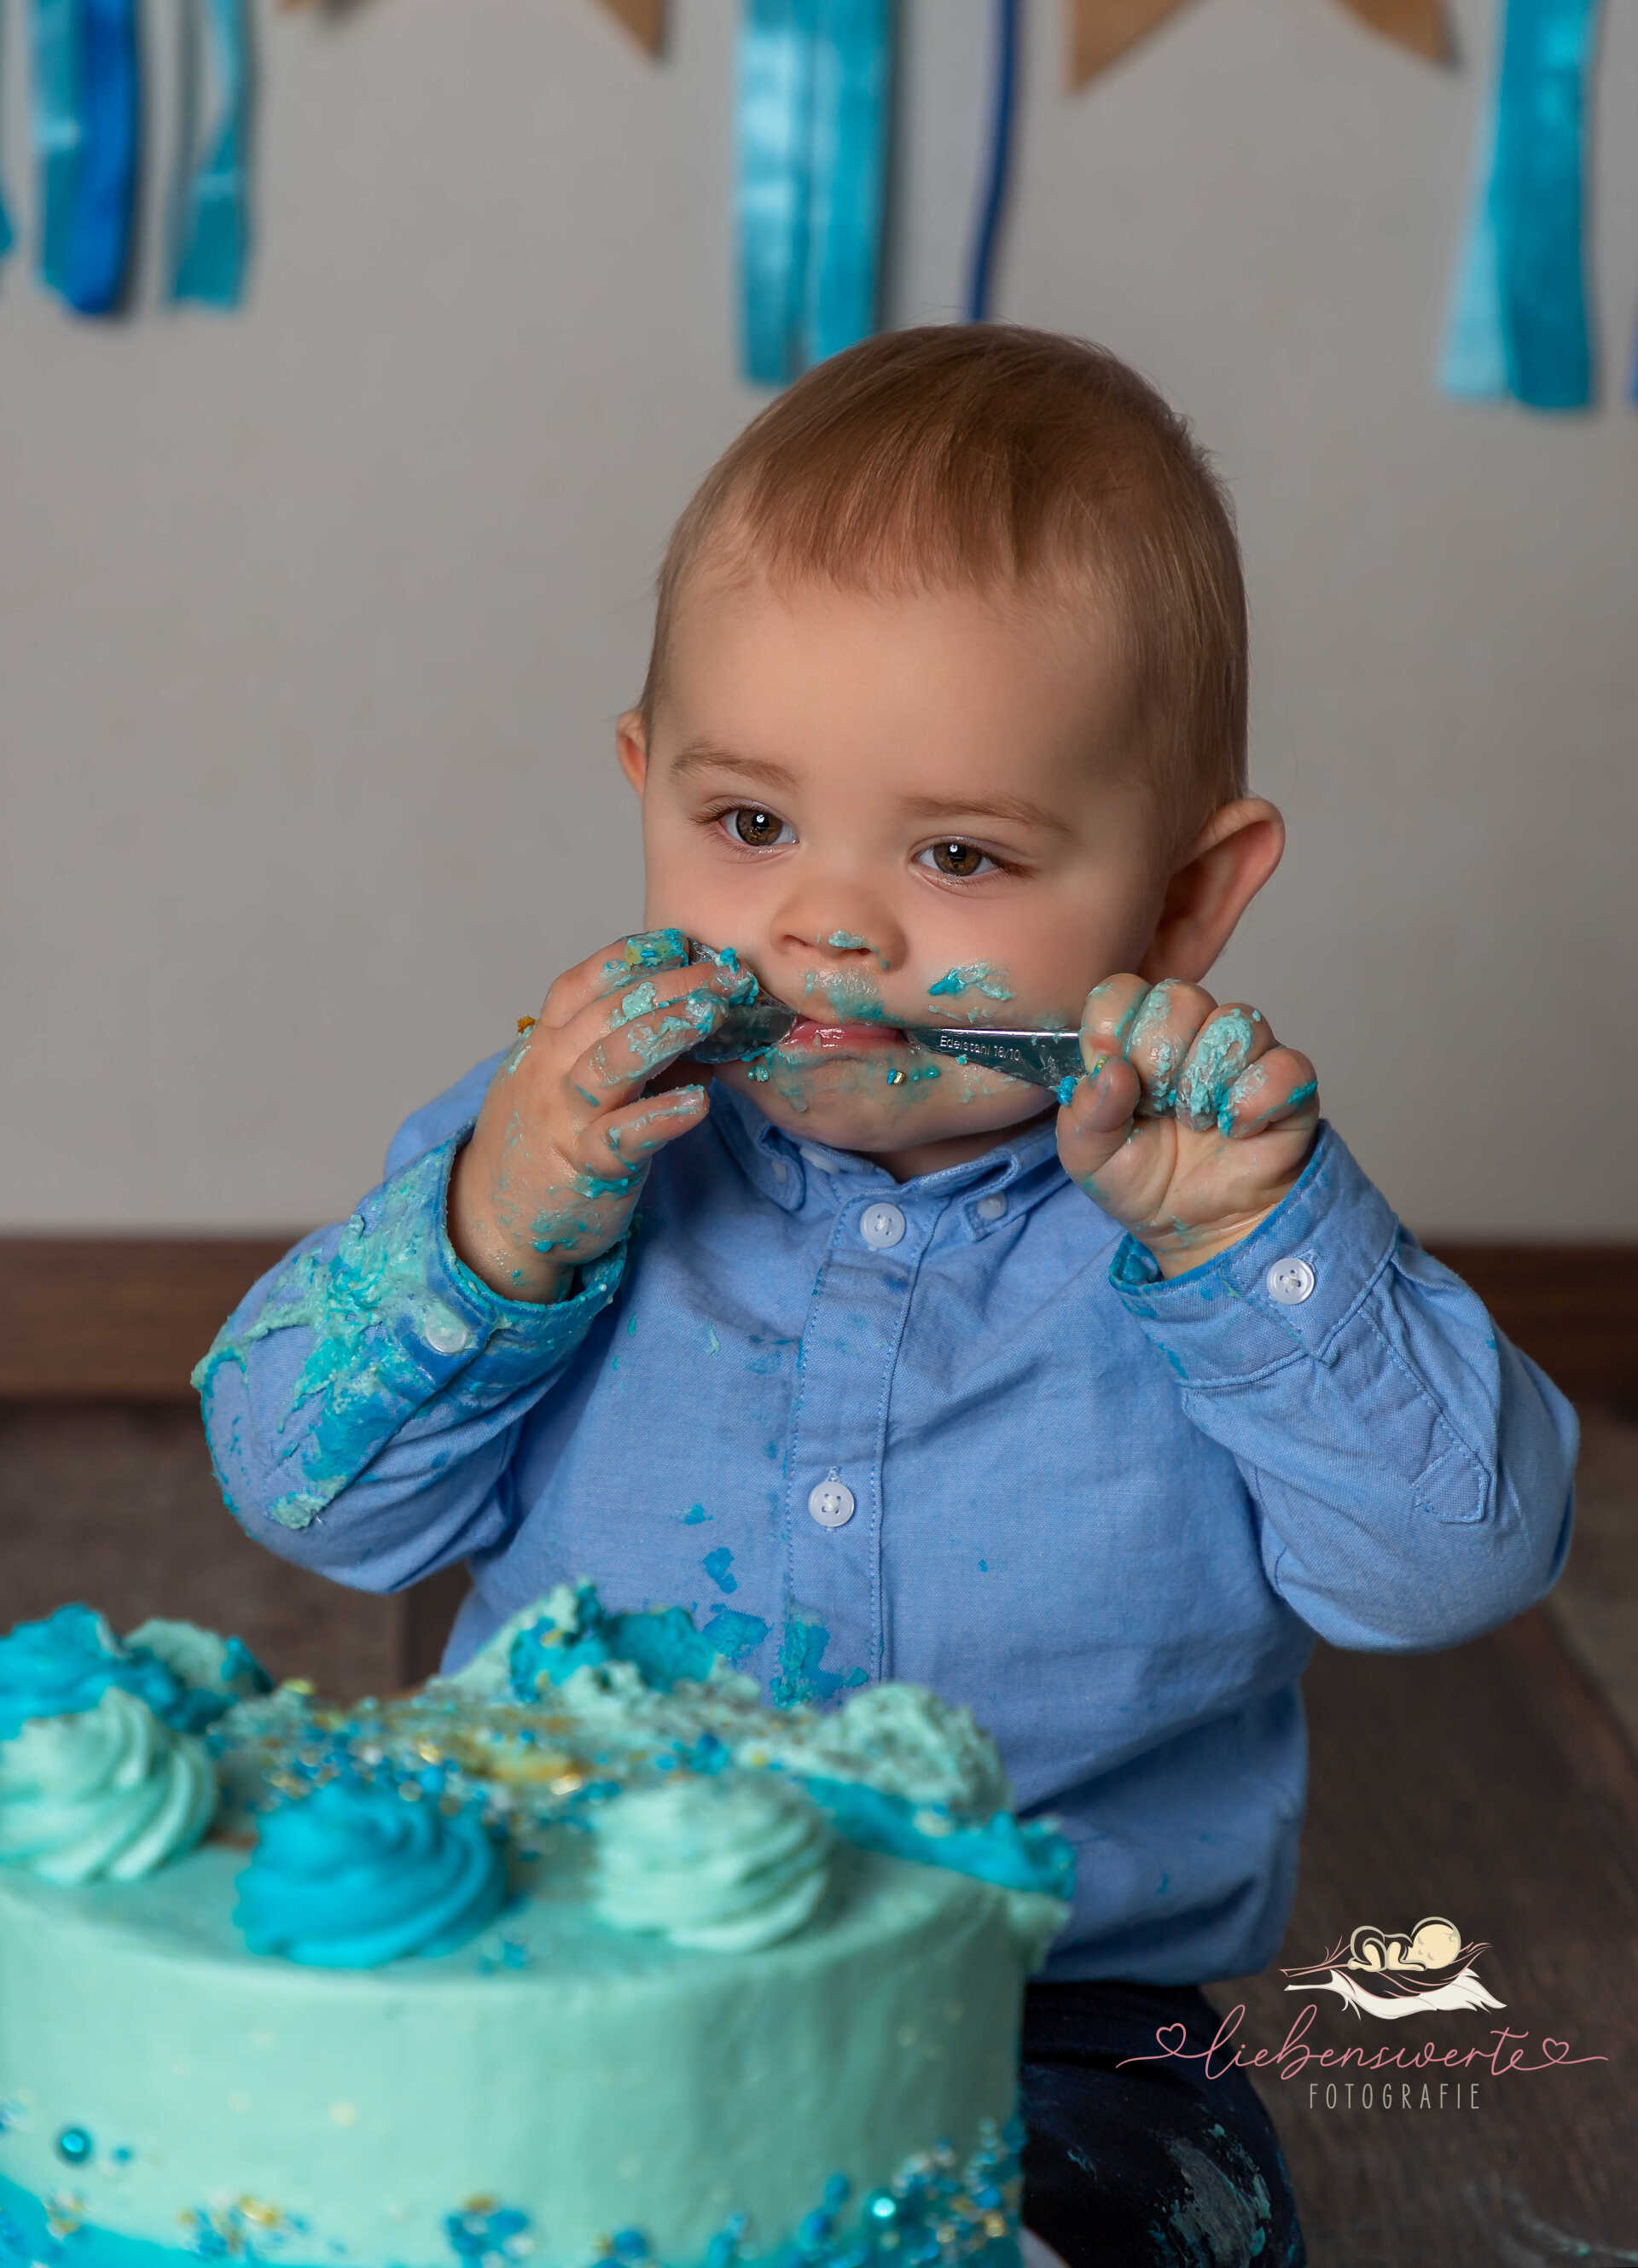 CakeSmash-Tortenshooting©liebenswerte-fotografie_167